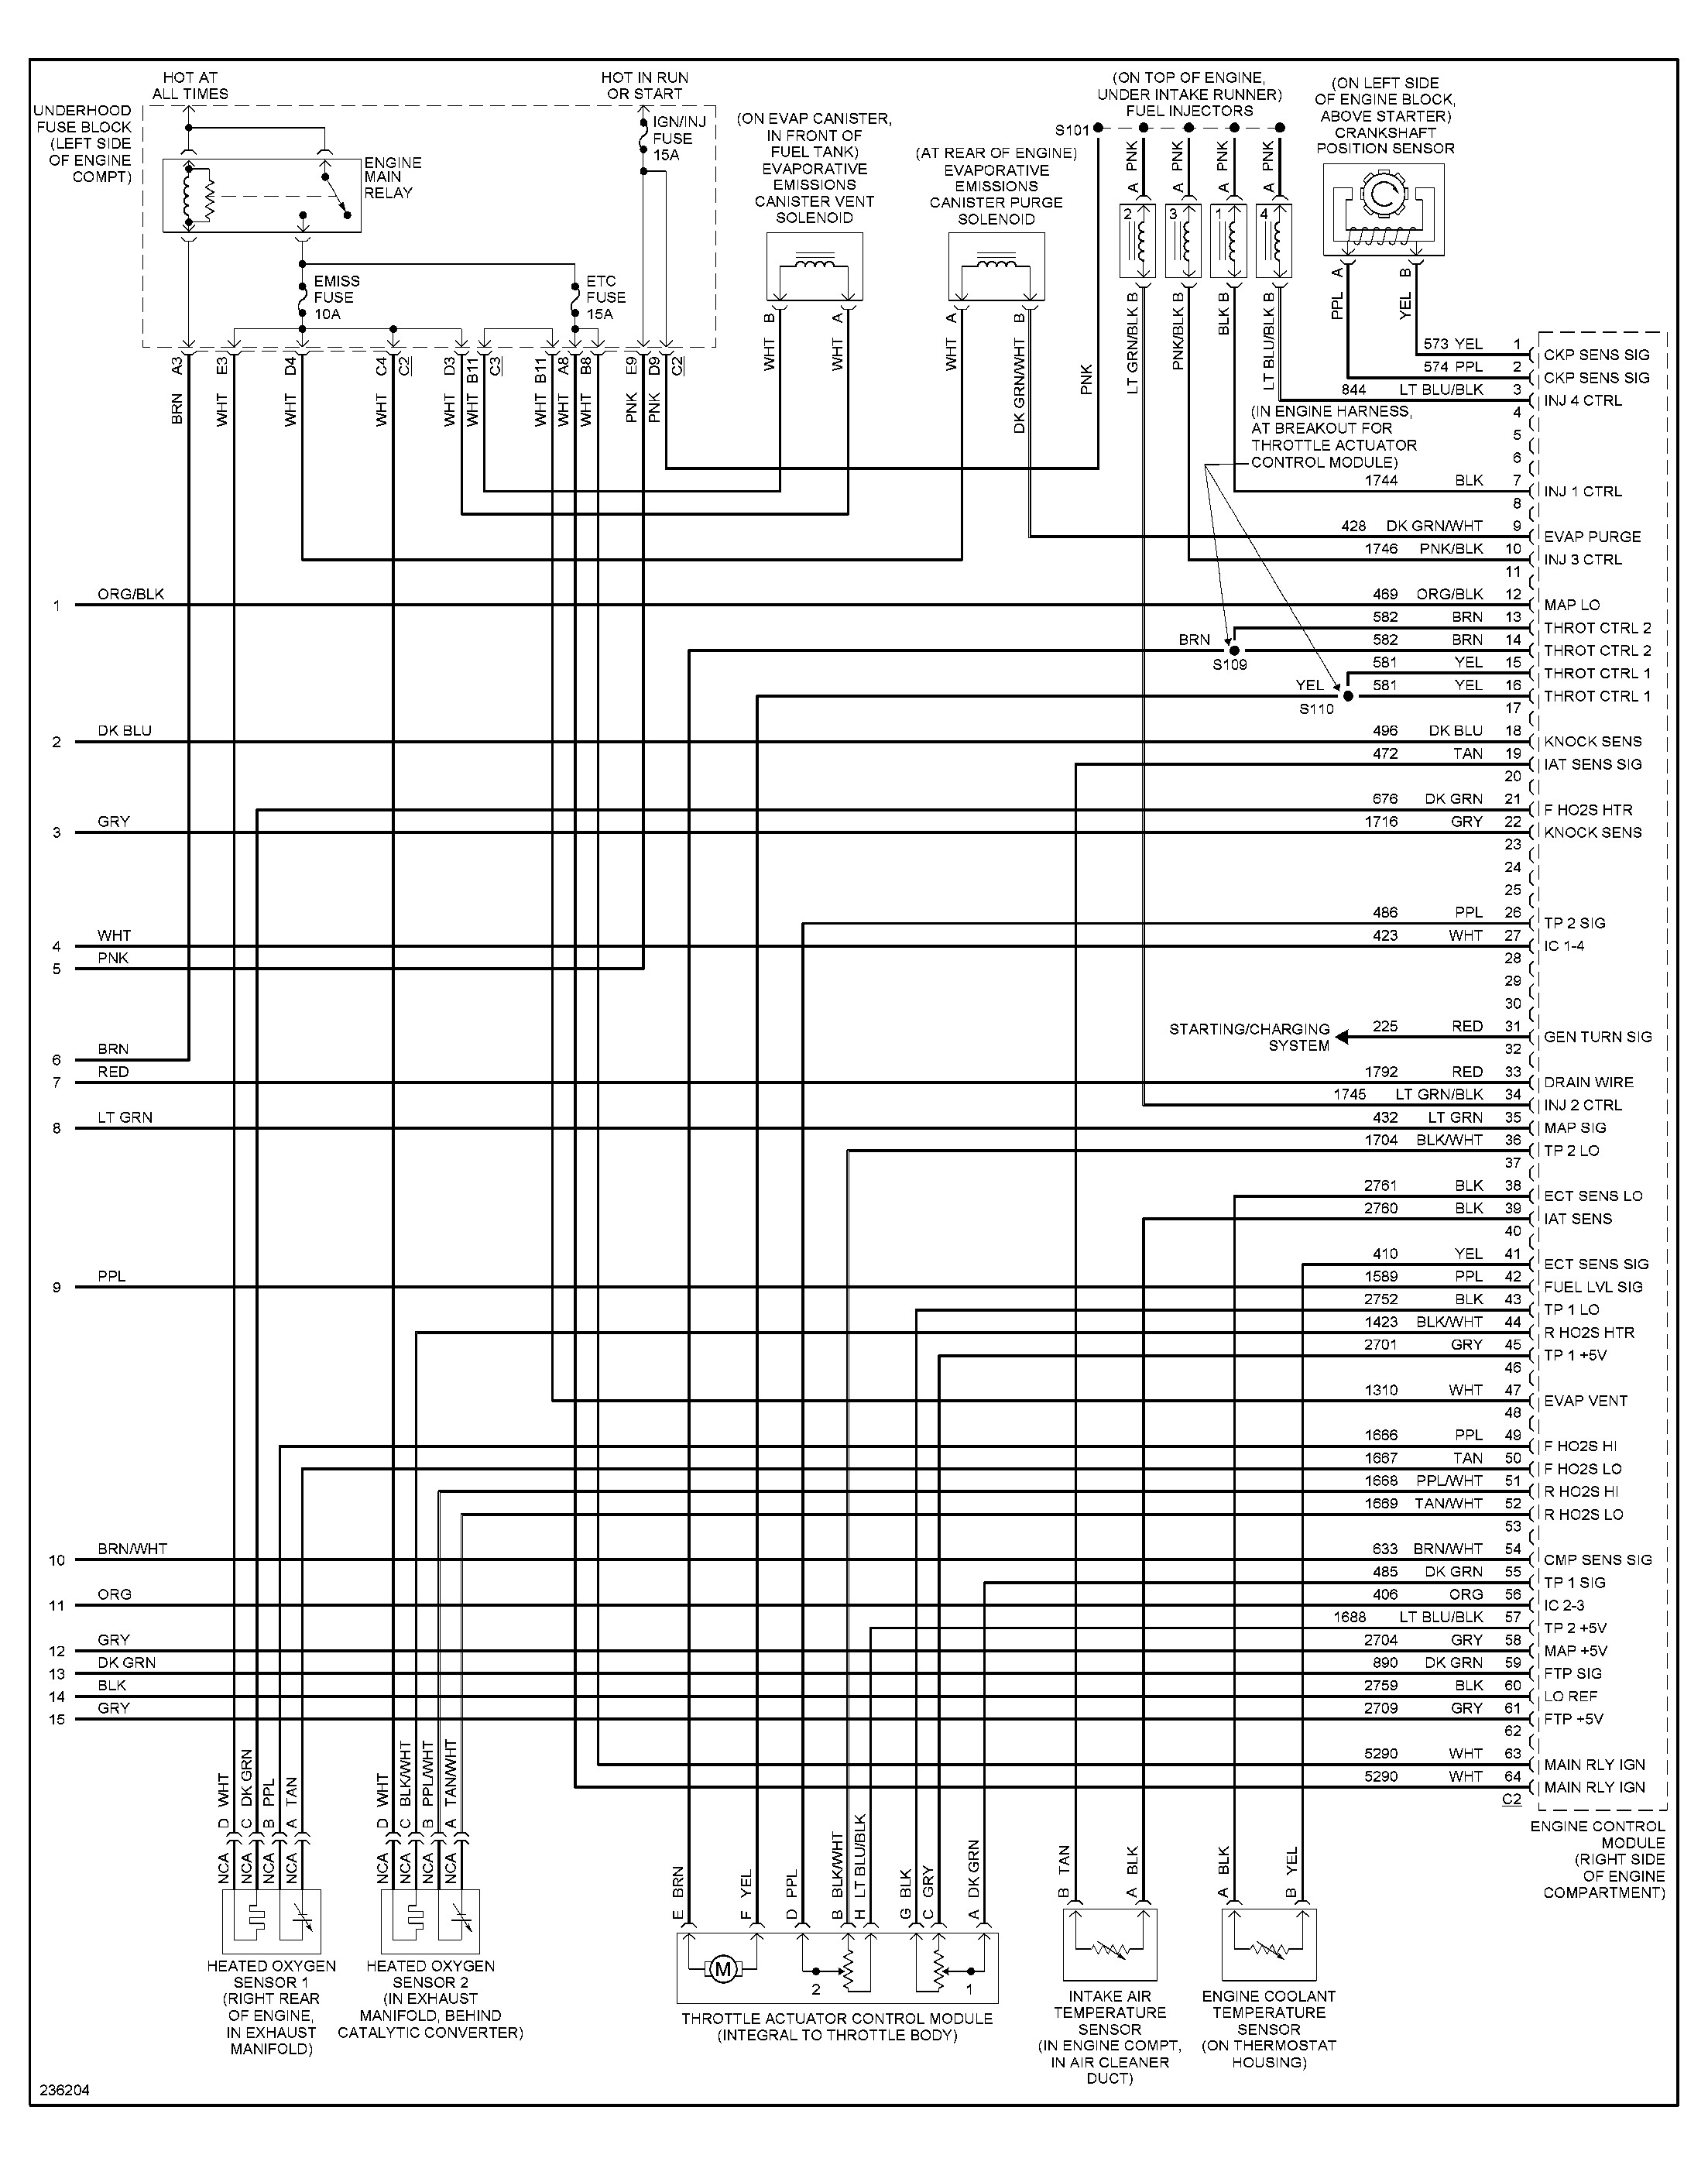 2003 Saturn Vue V6 Engine Diagram Wiring Diagram 2000 Saturn Sl2 Saturn Wiring Diagrams Instructions Of 2003 Saturn Vue V6 Engine Diagram